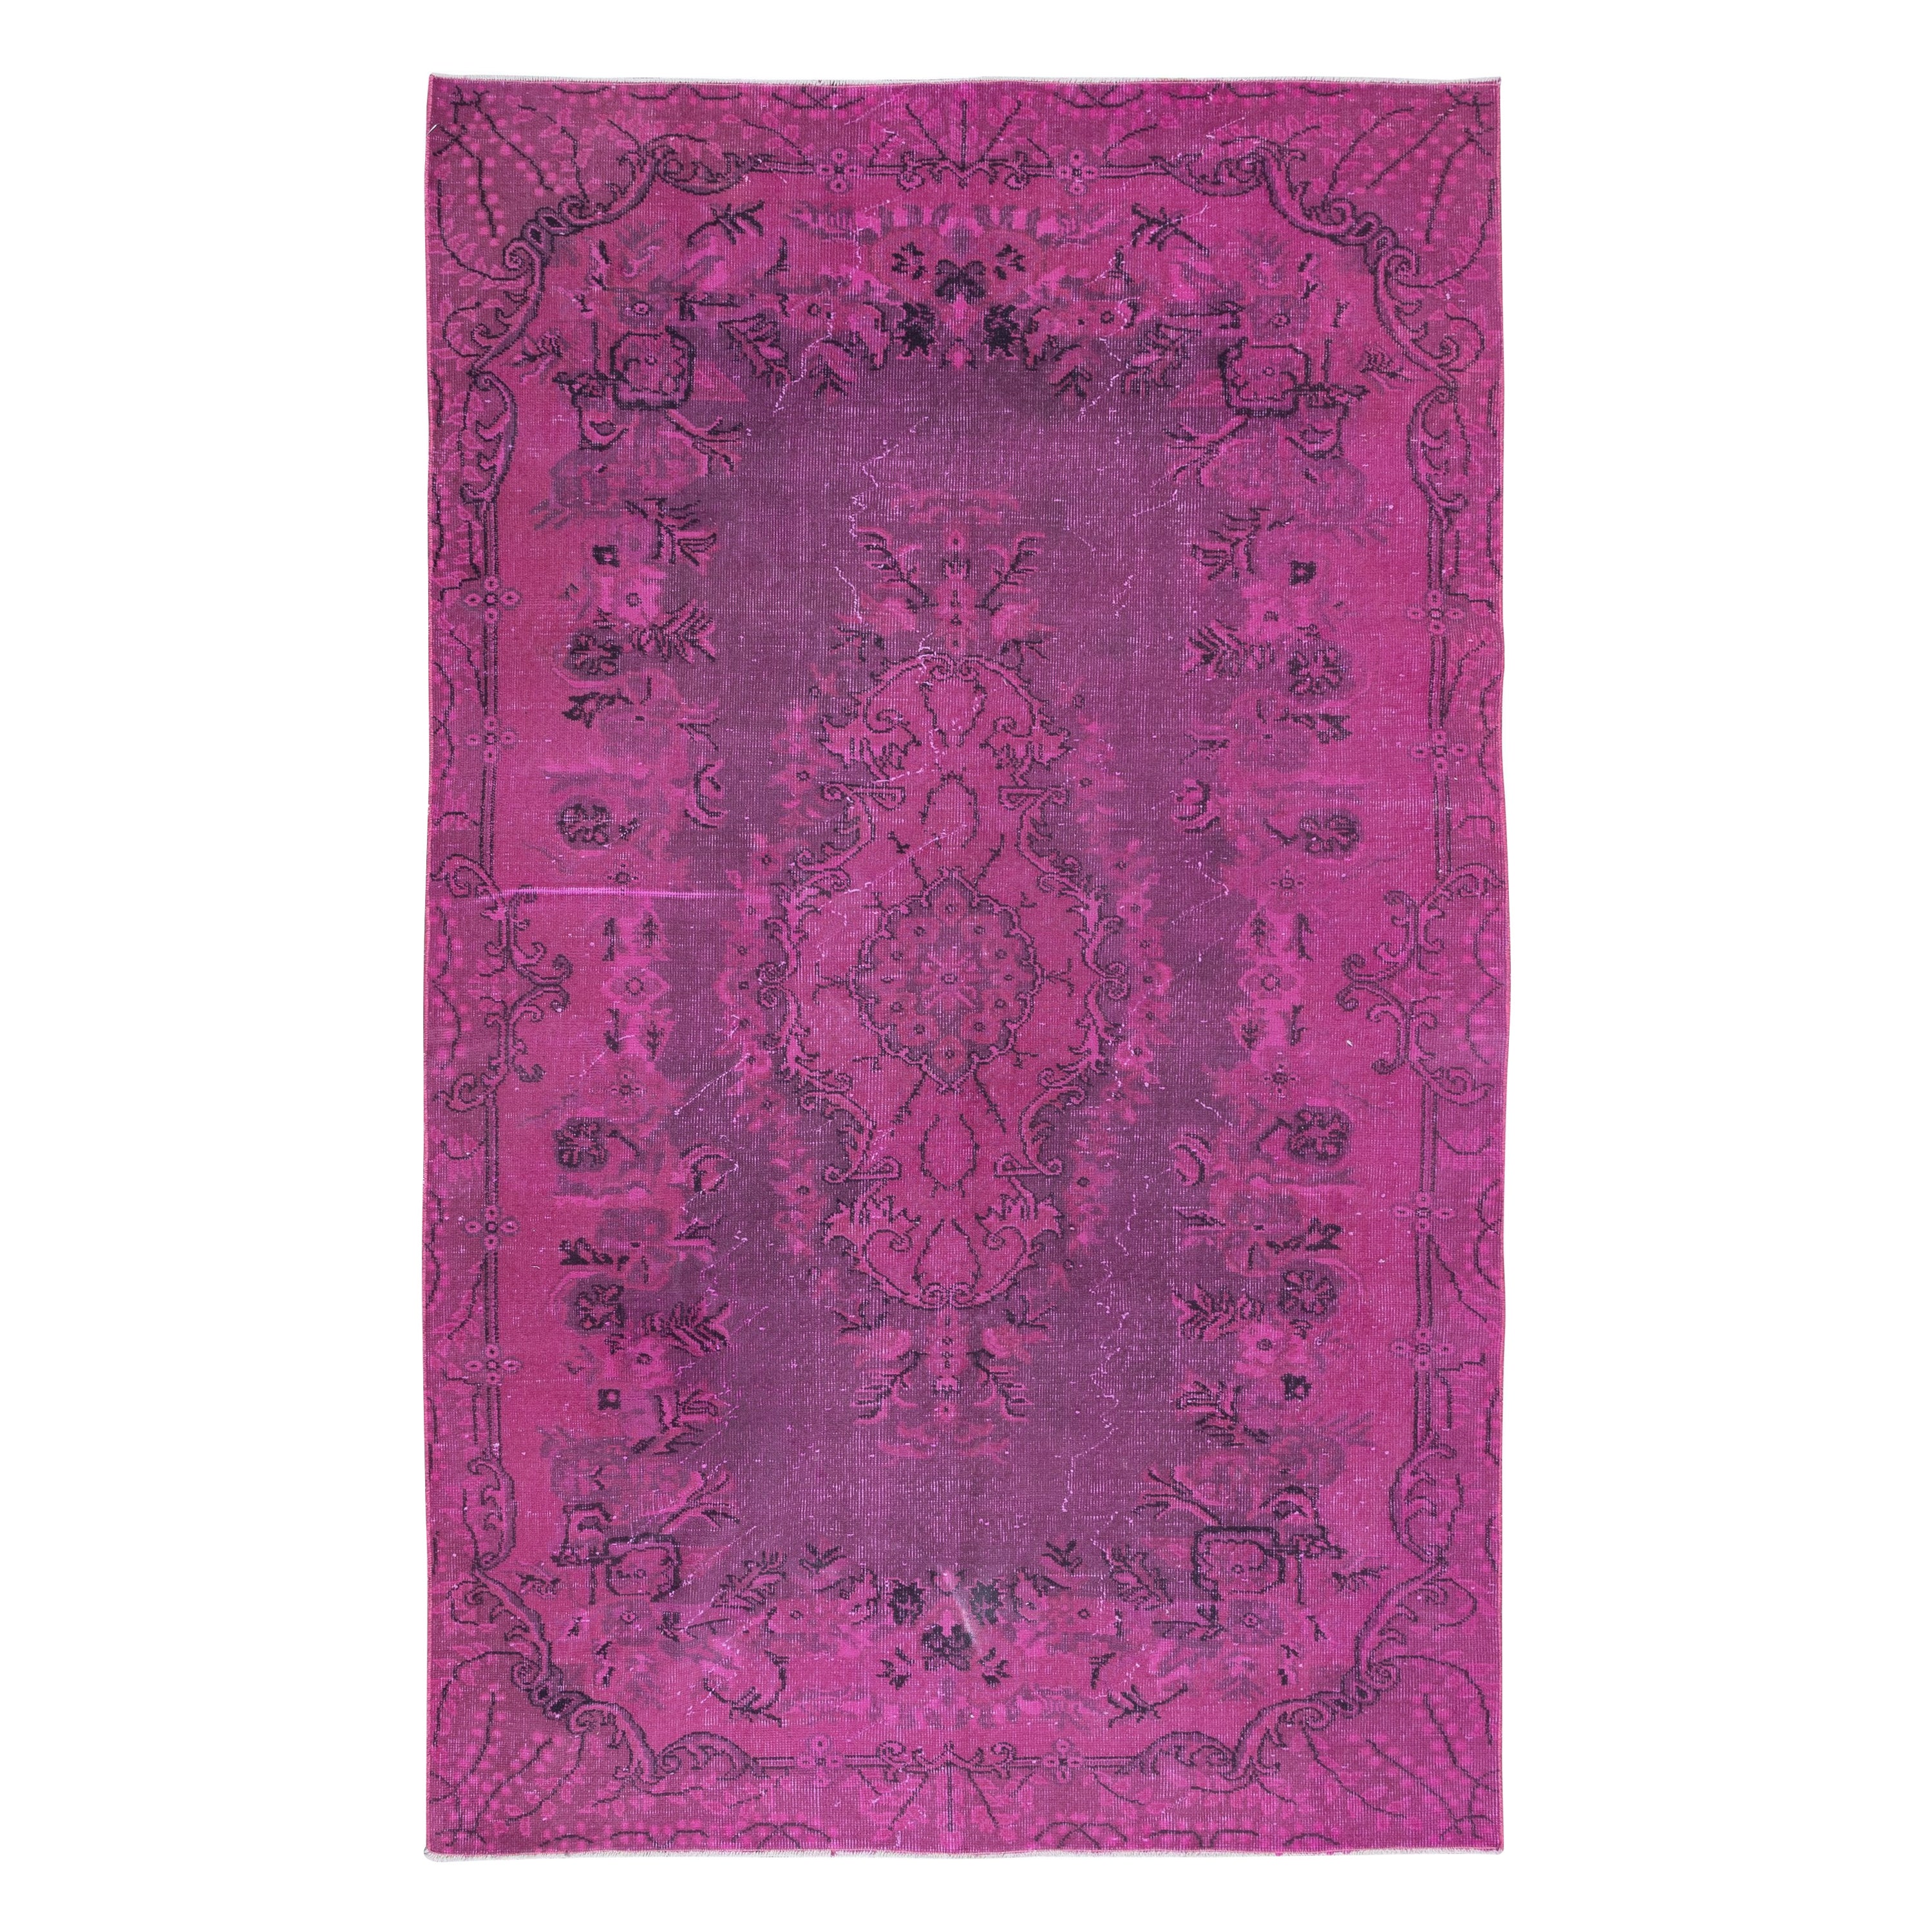 5.4x8.7 Ft Pink Handmade Modern Rug, Turkish Living Room Carpet with Medallion (tapis de salon turc avec médaillon)